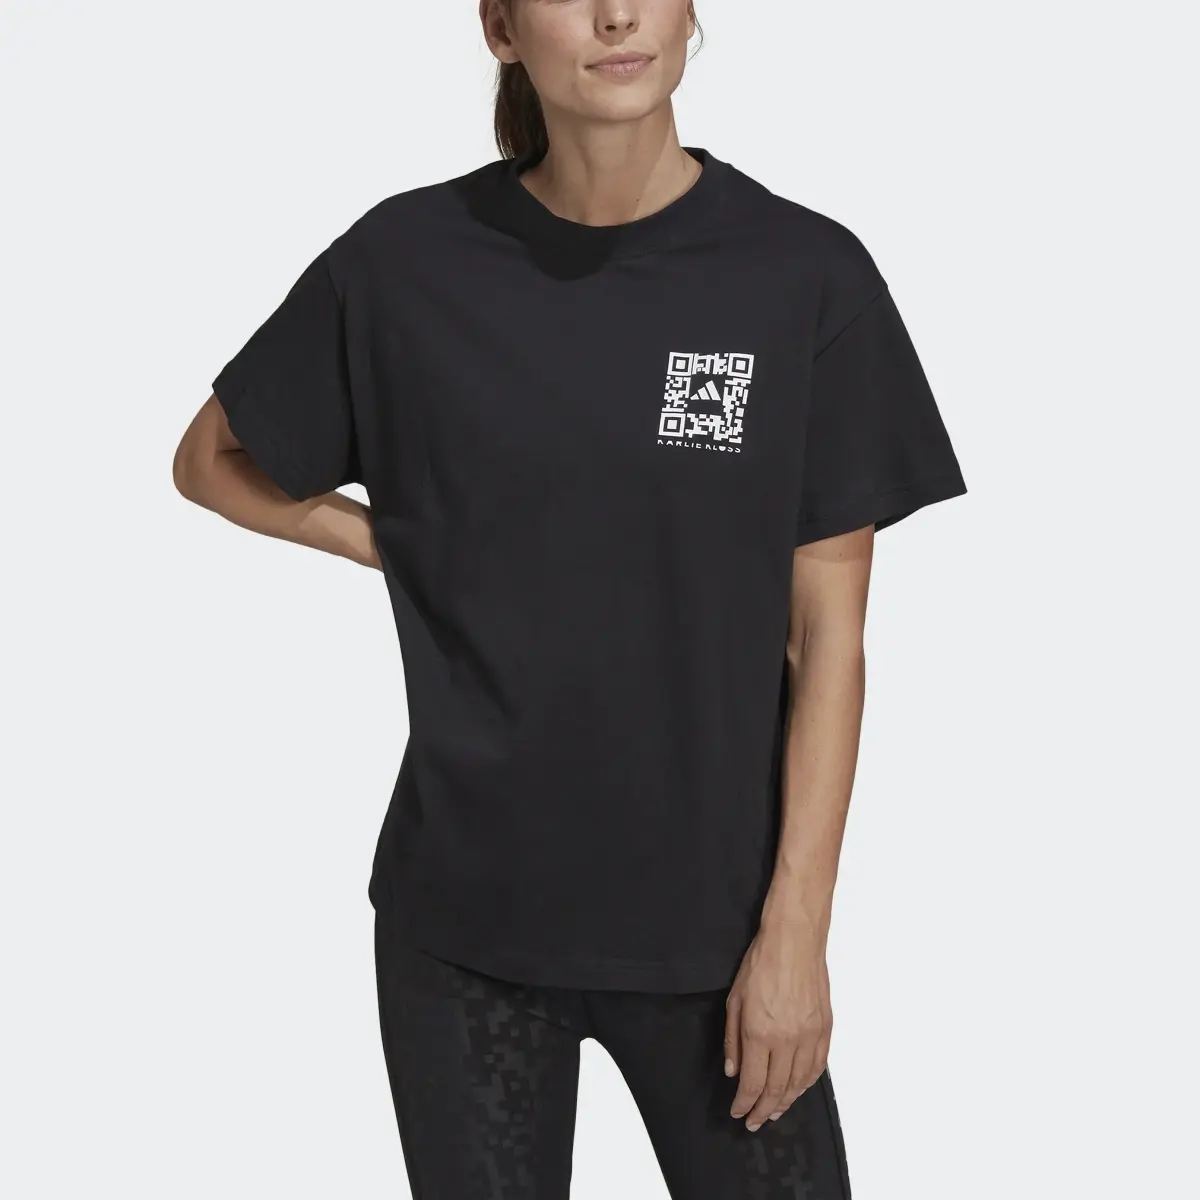 Adidas T-shirt Curta adidas x Karlie Kloss. 1